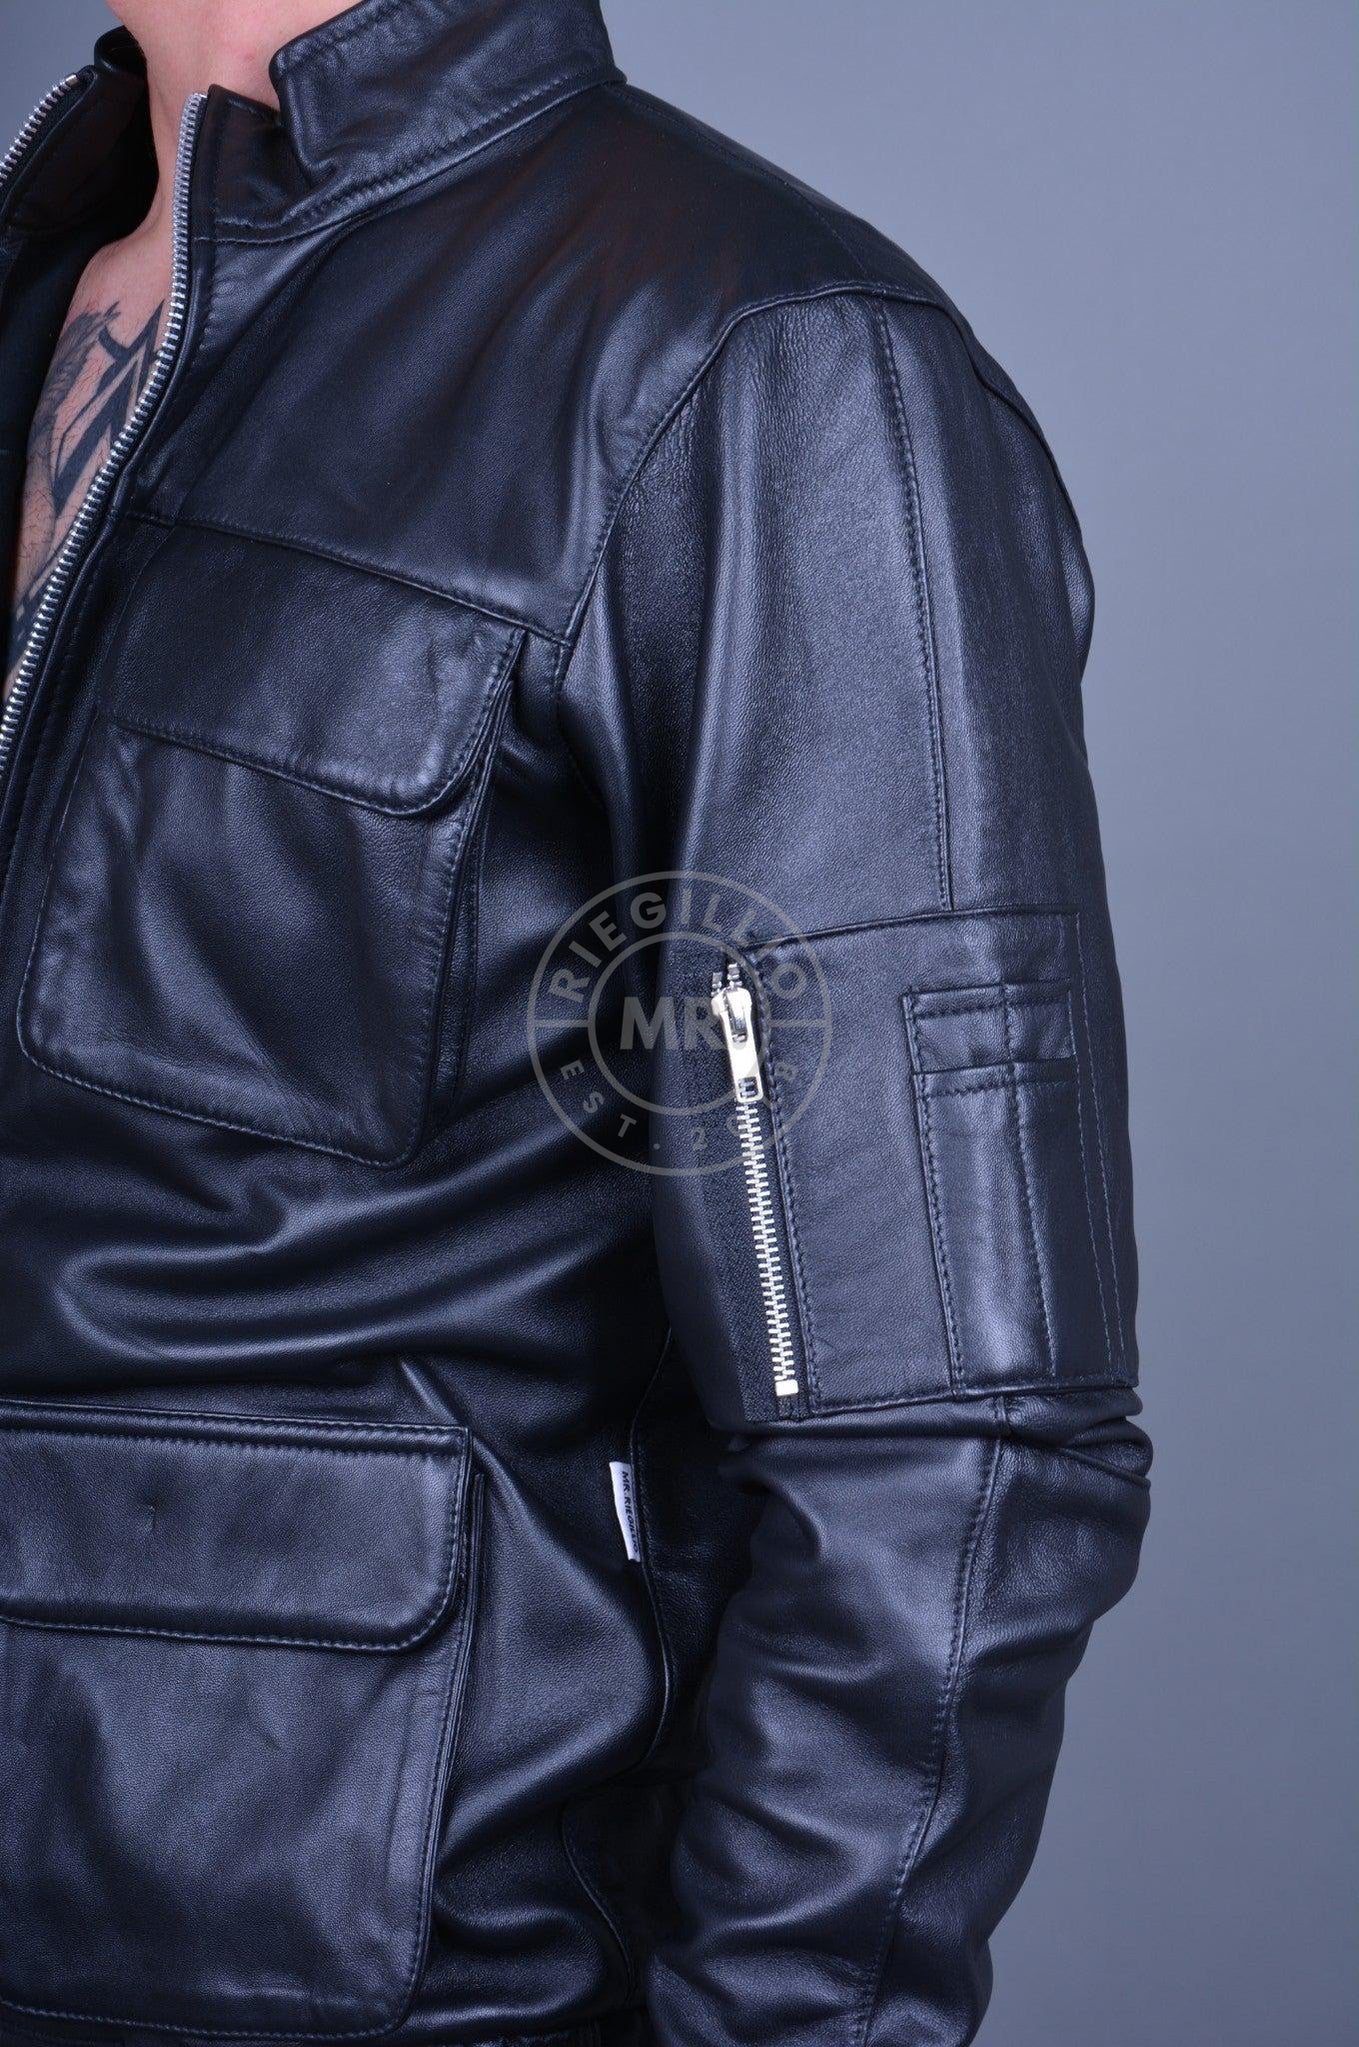 Black Leather Utility Jacket-at MR. Riegillio